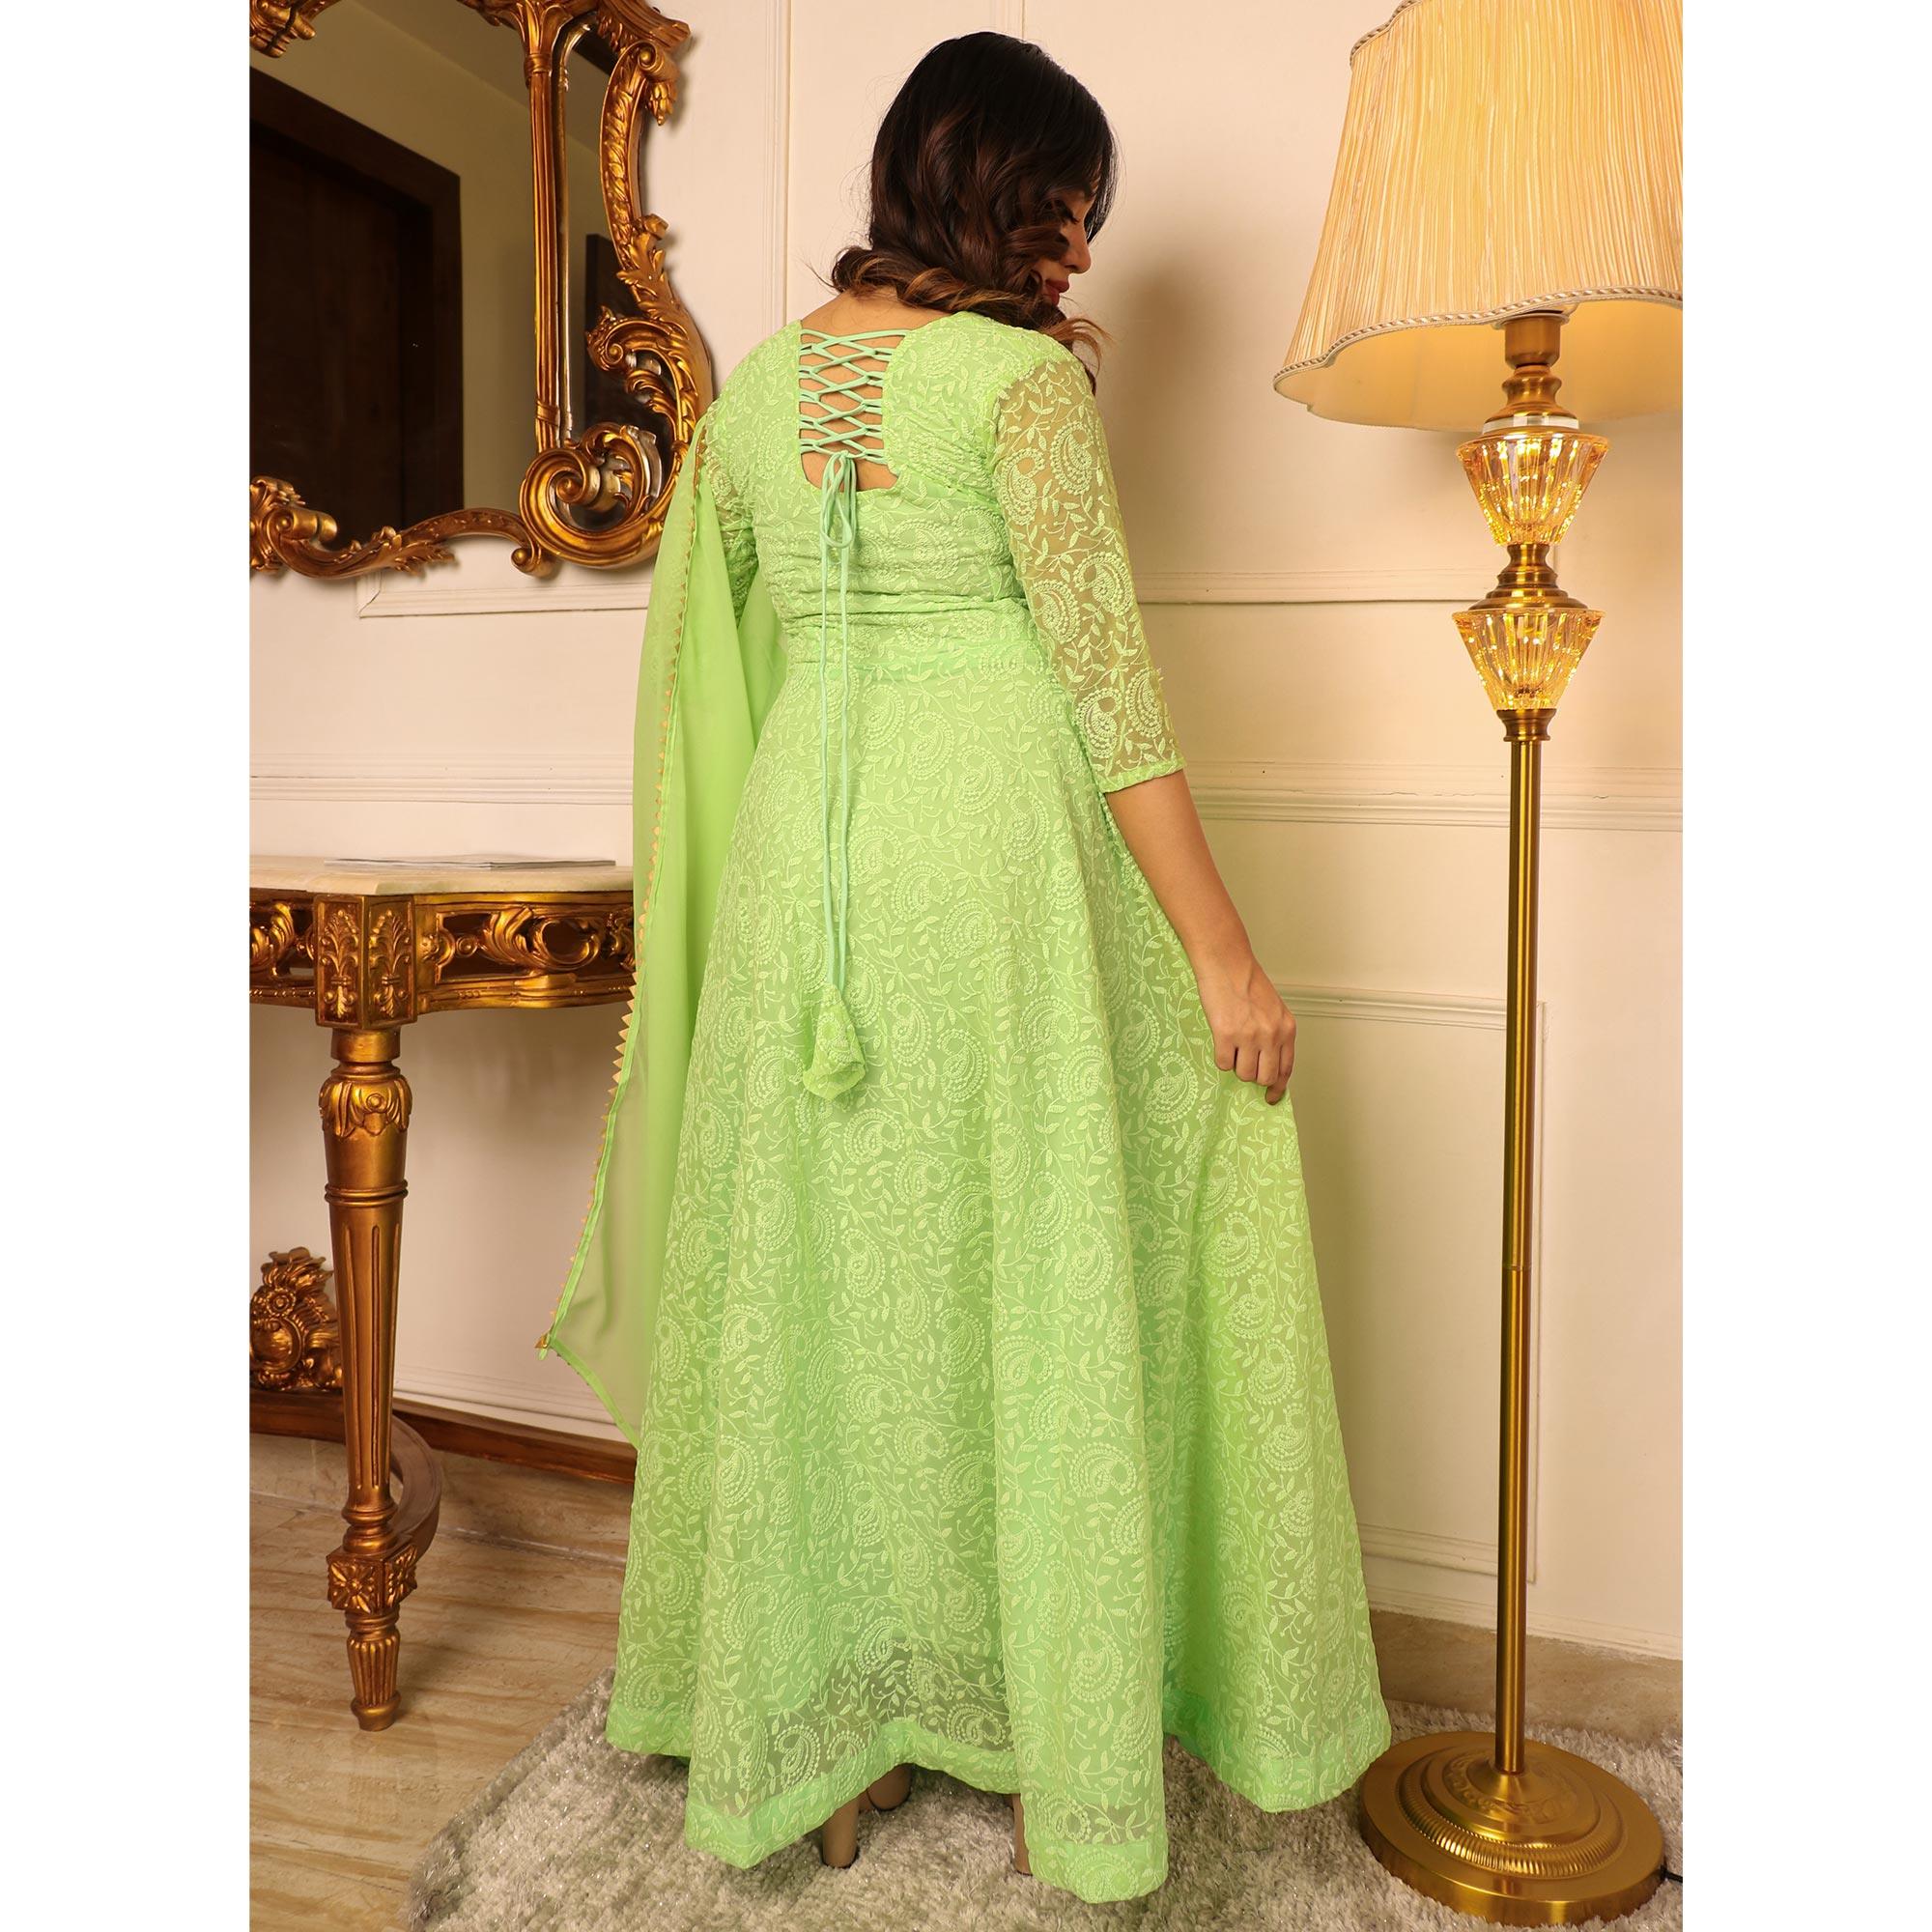 Pastel green ruffled strap dress by Shreetatvam  The Secret Label